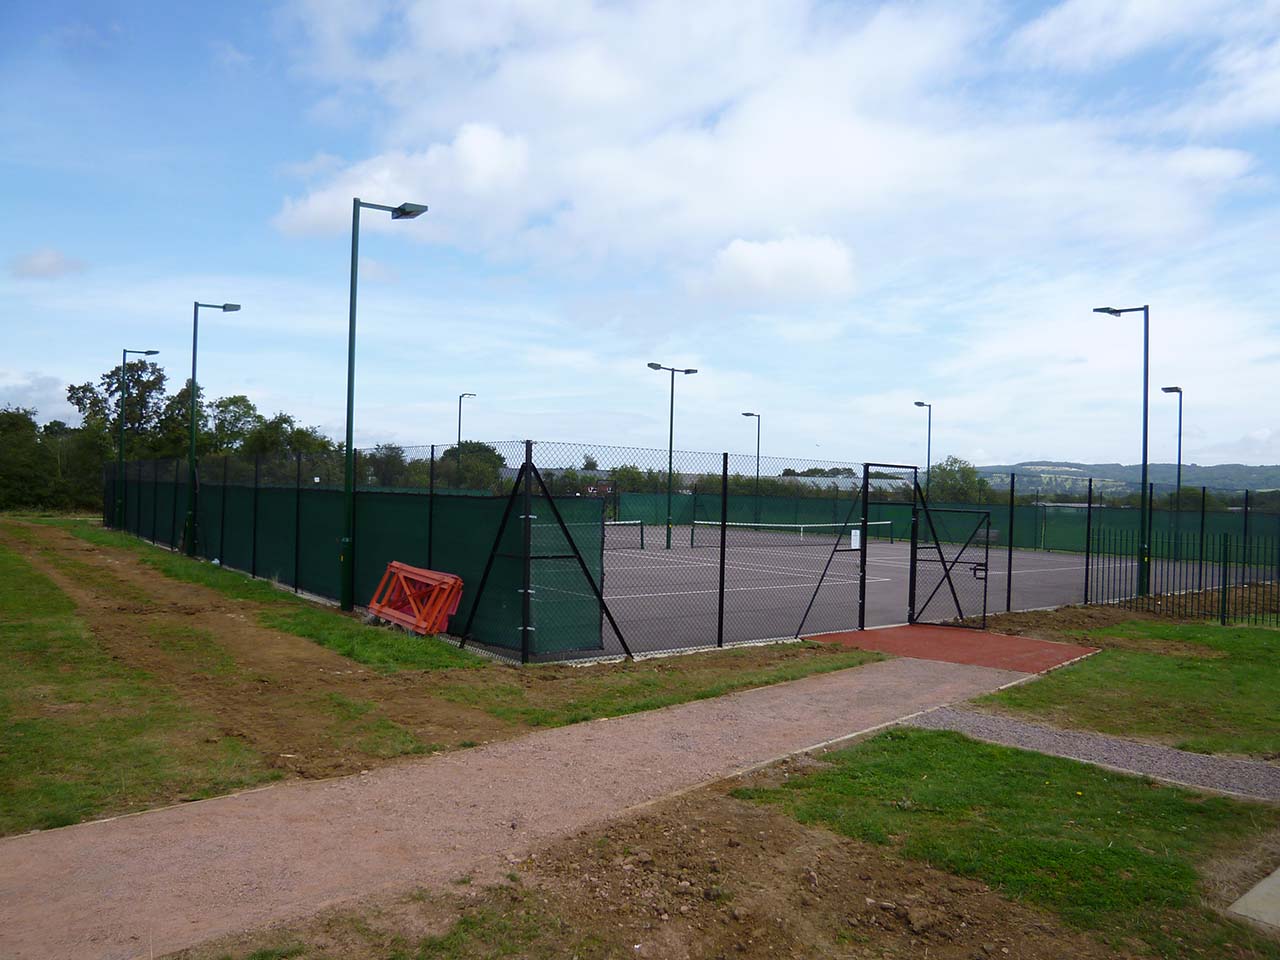 Winchcombe Tennis Club